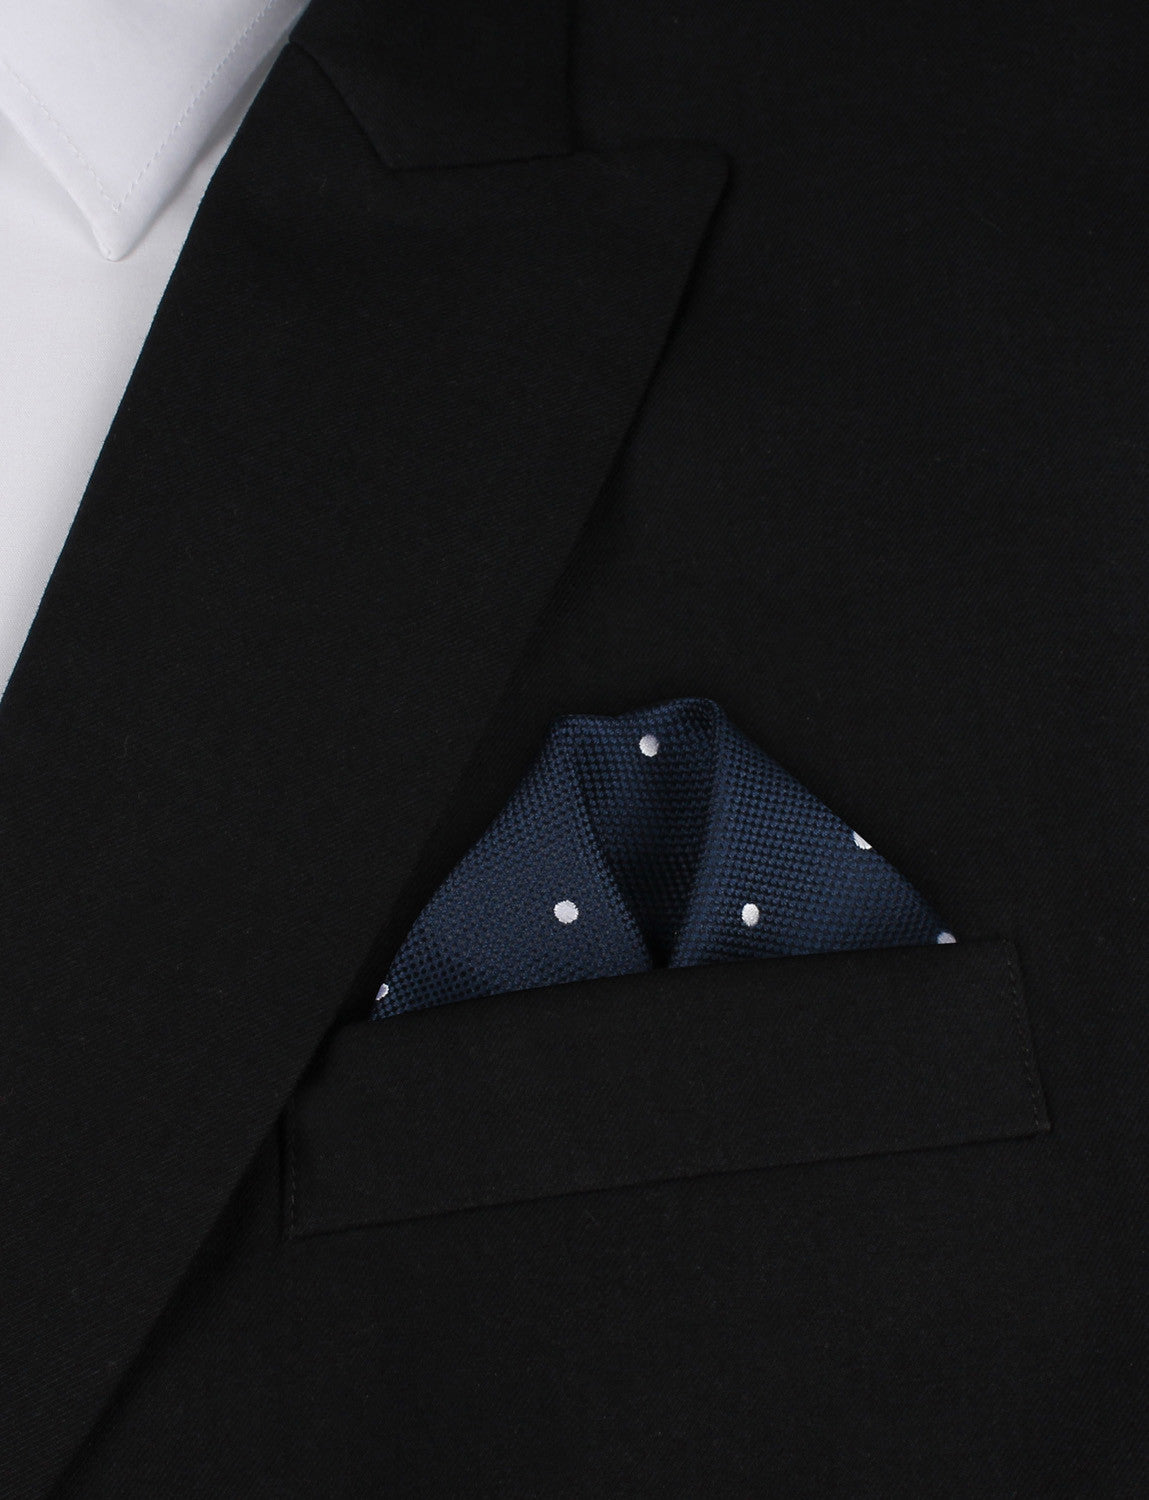 Navy Blue, White Polka Dot Pocket Square | Mens Suit Hanky | Australia ...